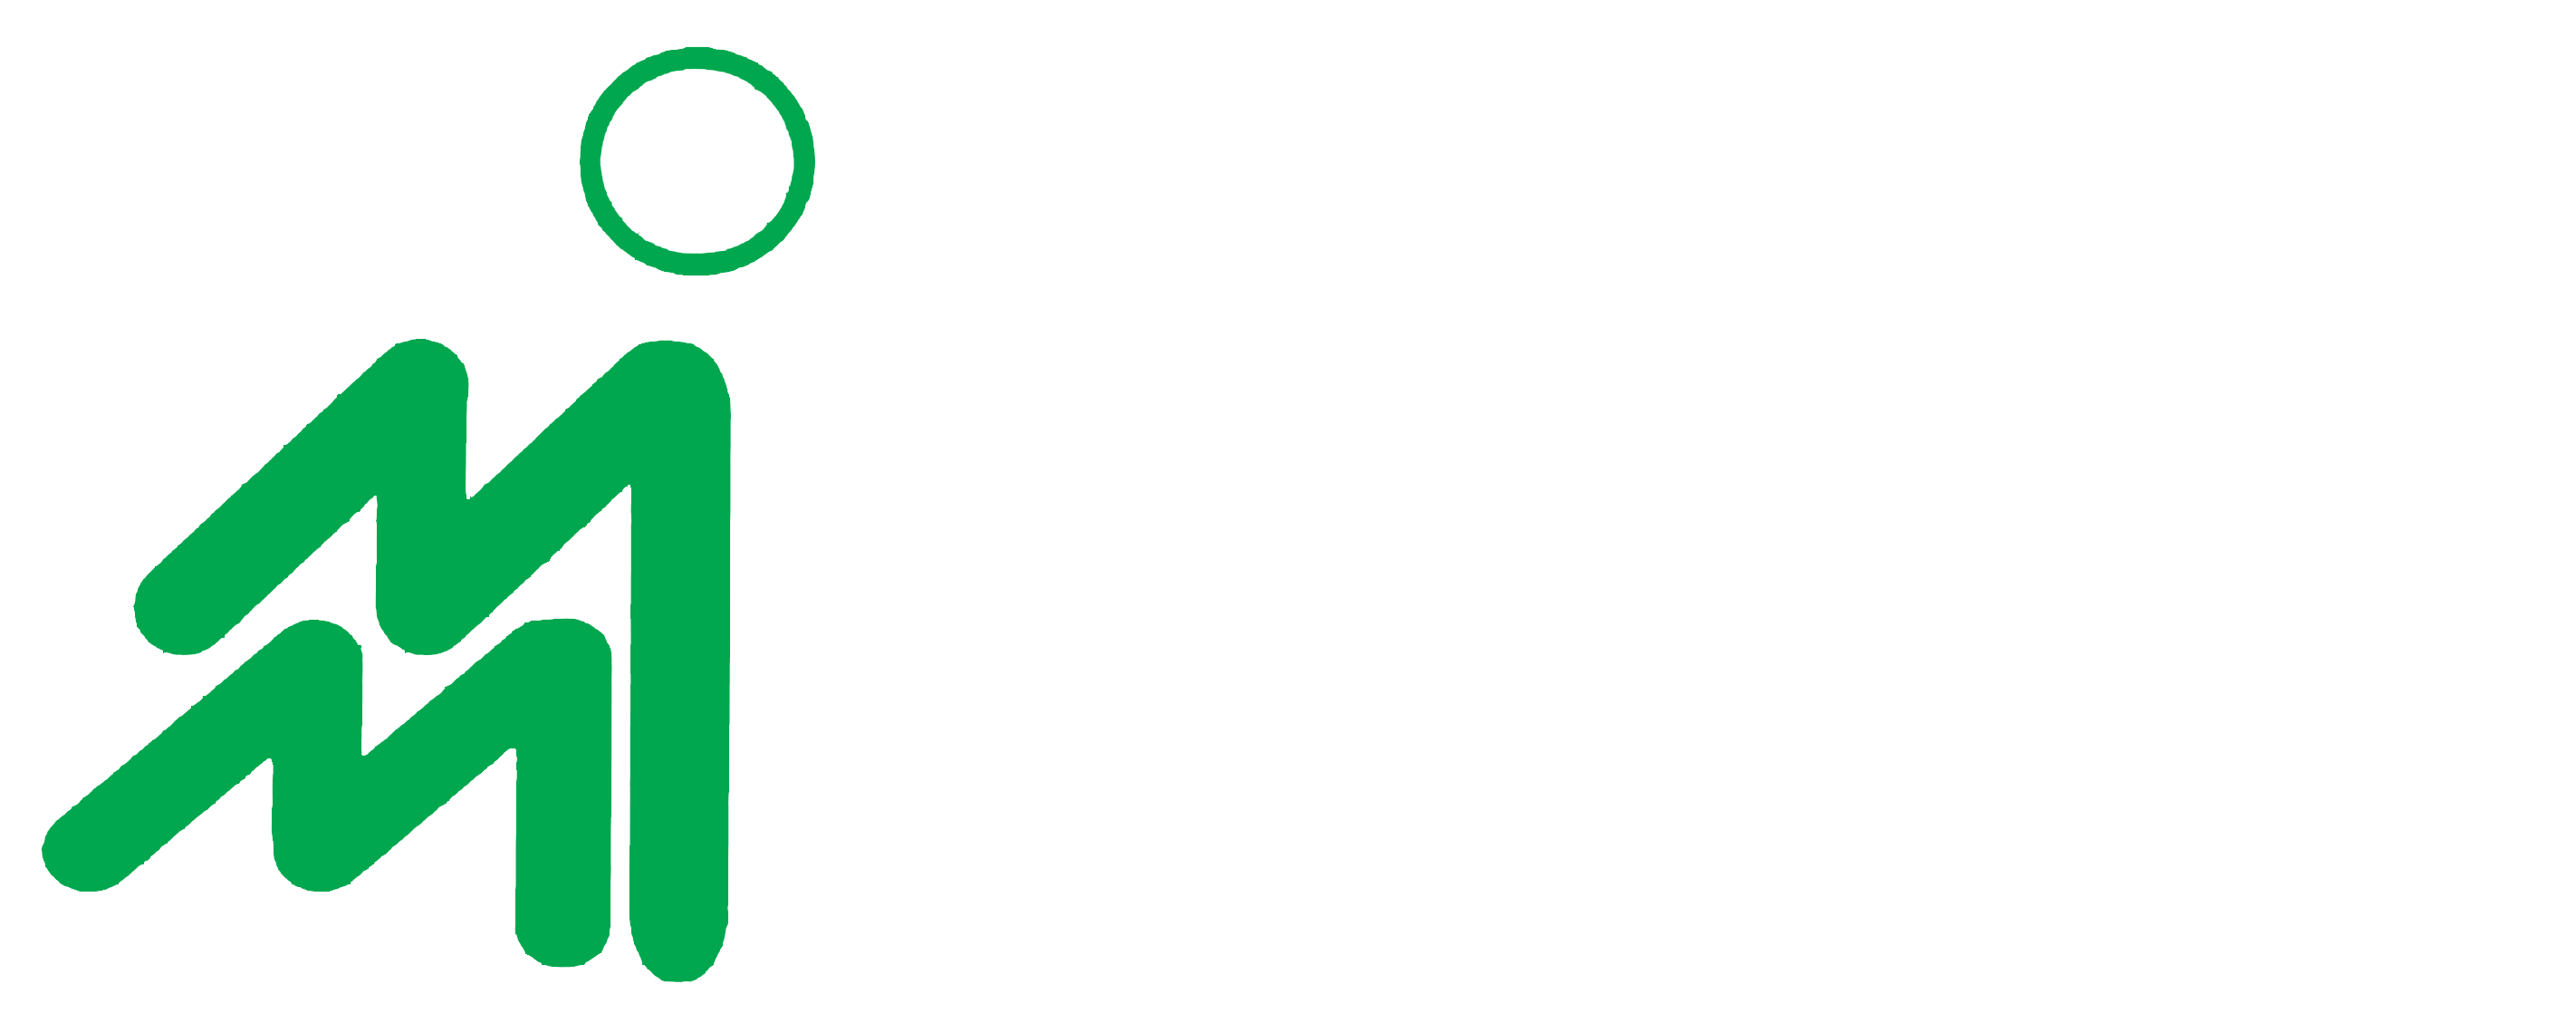 Metro Island Mortgage